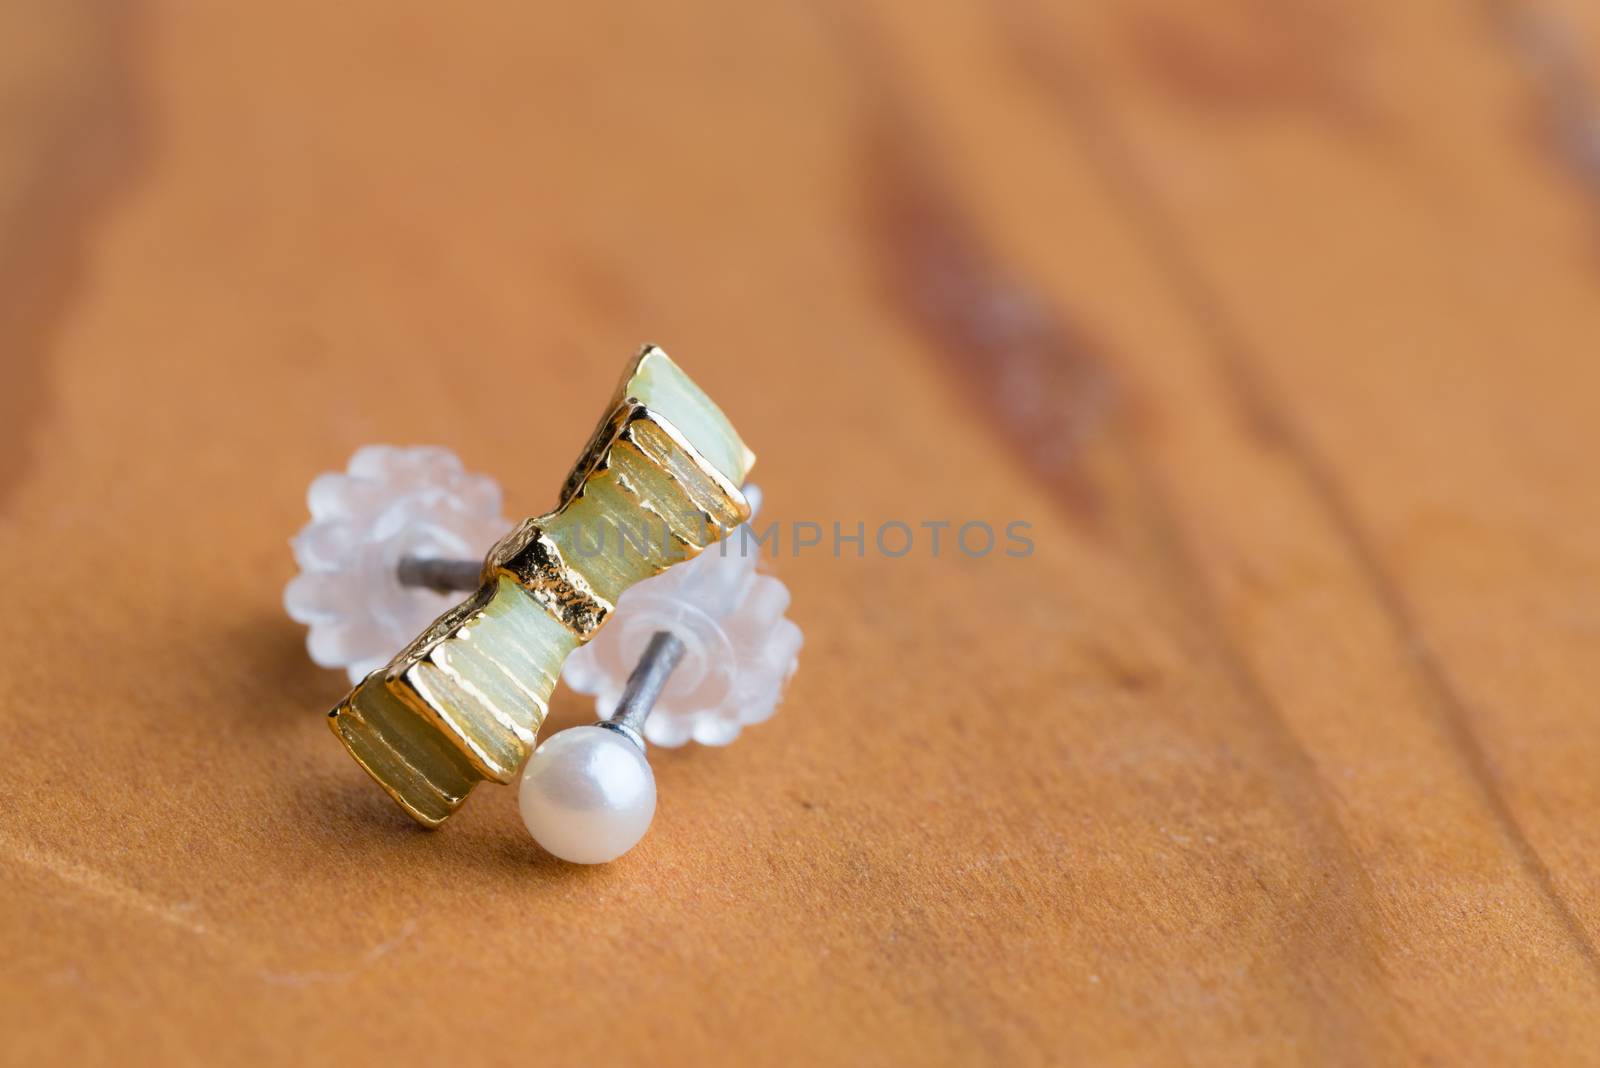 A macro shot of a green ribbon earring and white pearl earring.